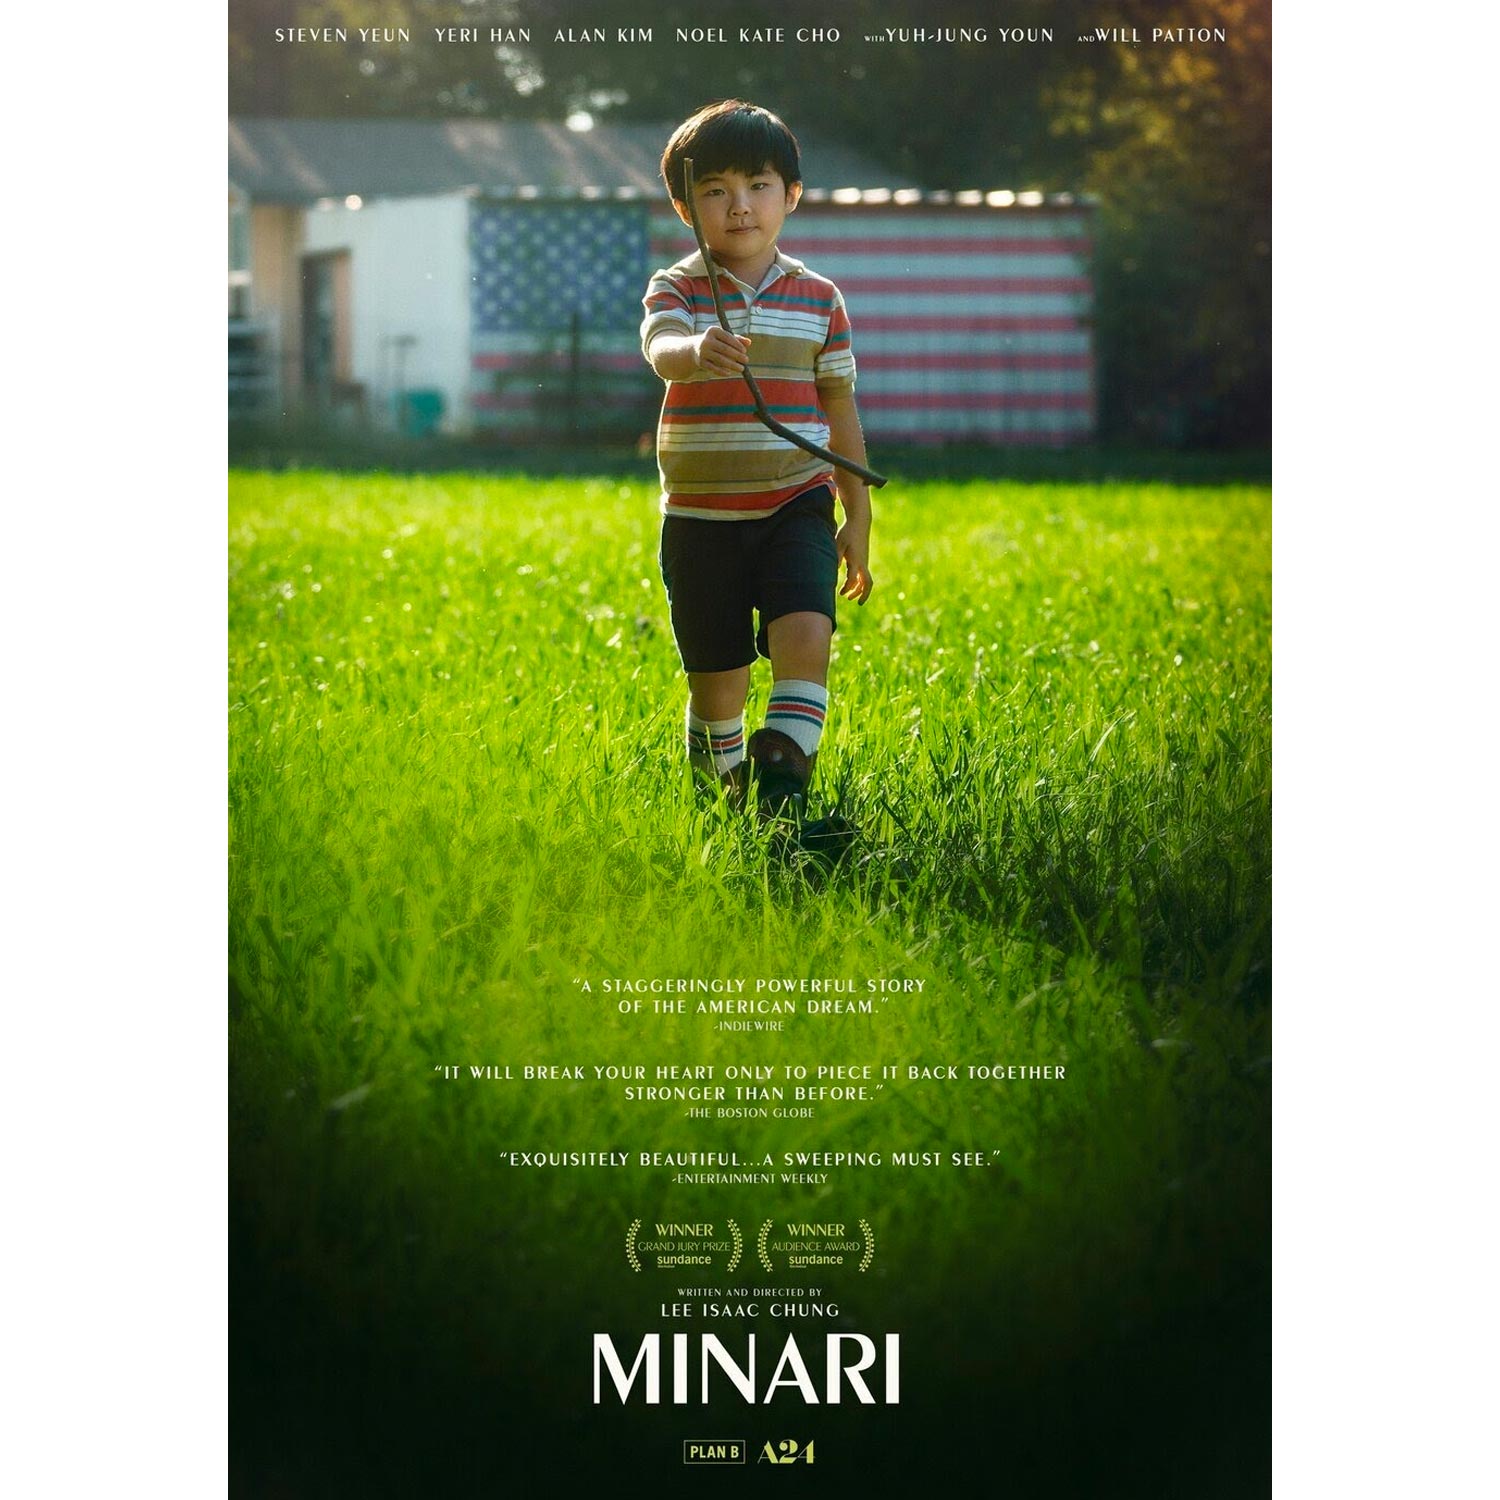 The poster for Minari.